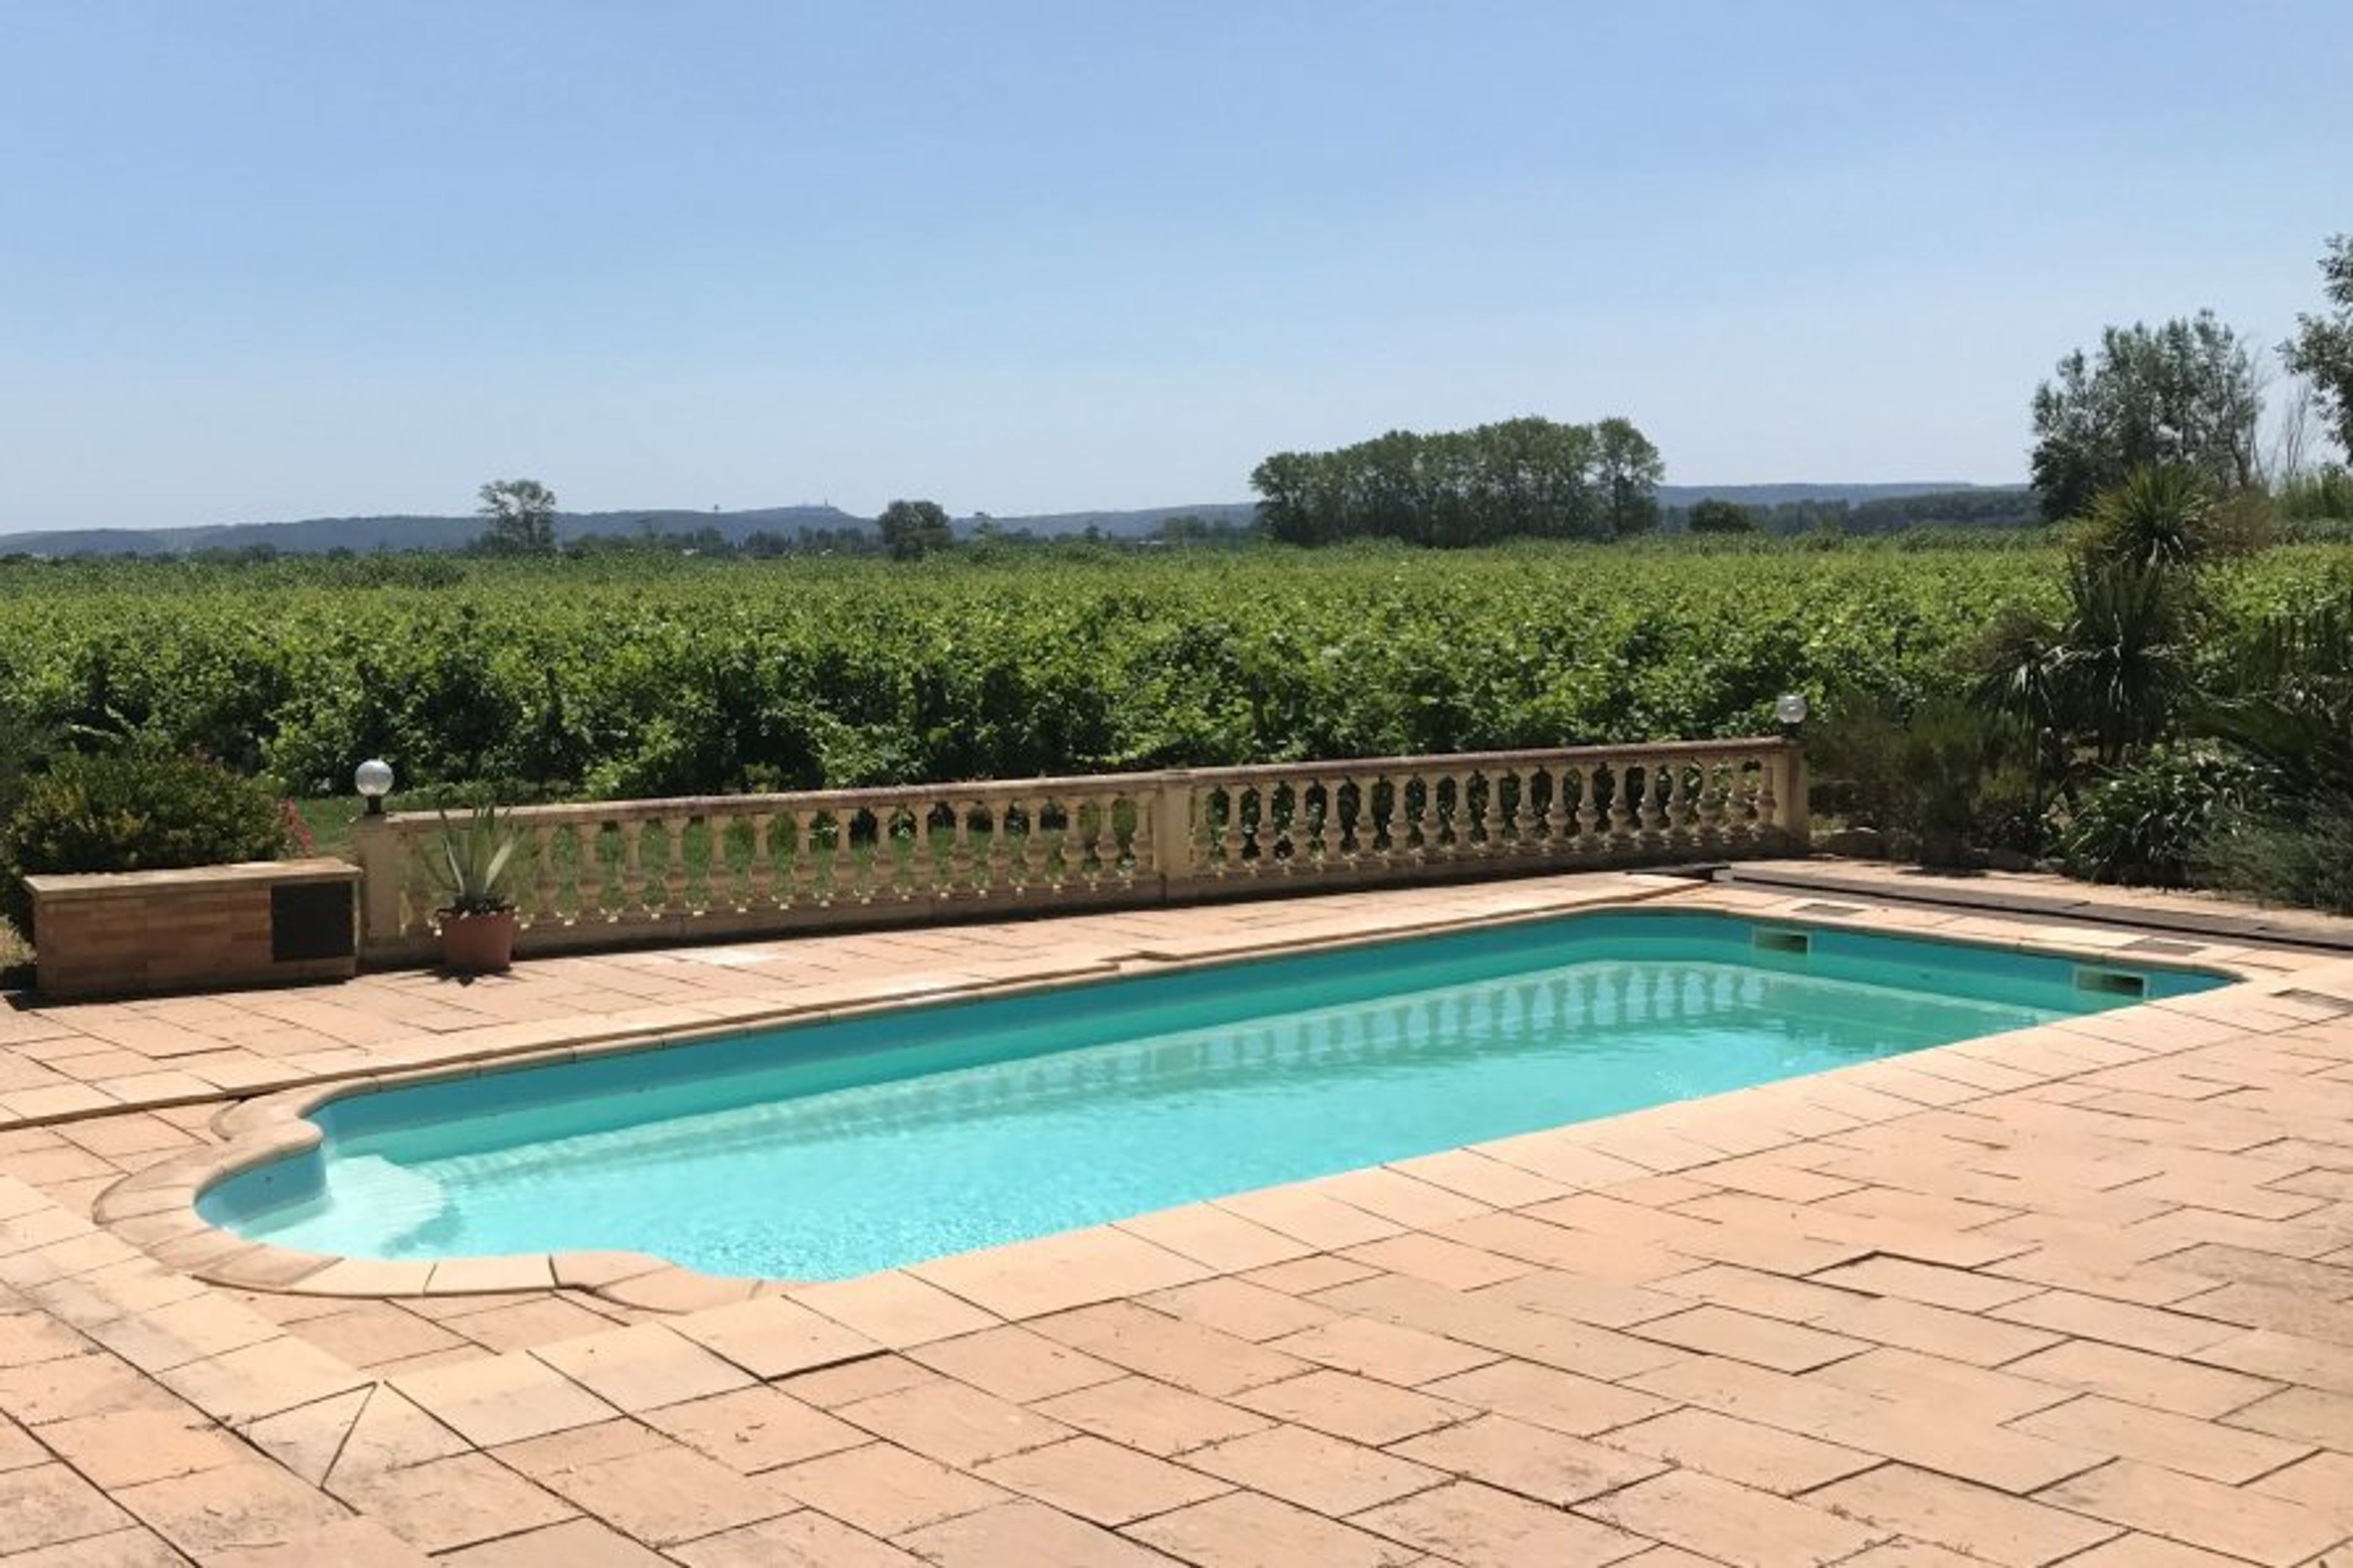 Swimming pool, looking towards the vineyards